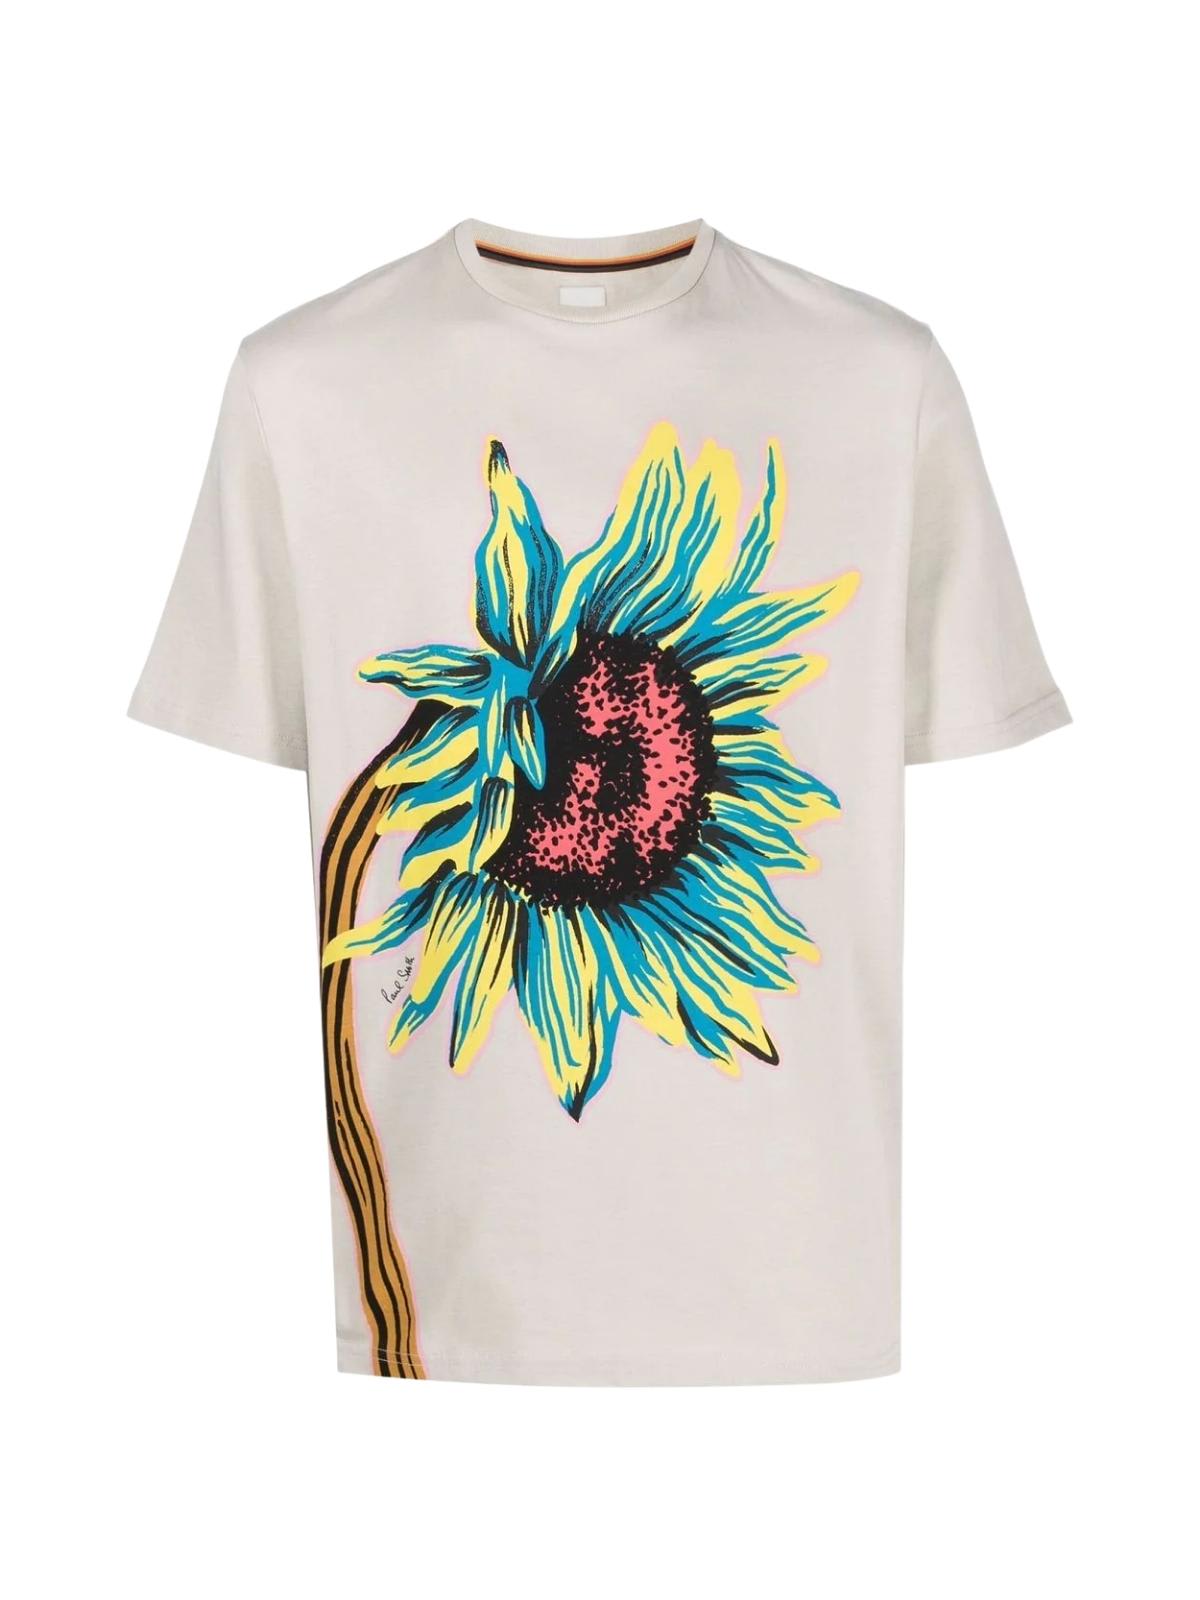 Paul Smith Gents Tshirt Sunflower